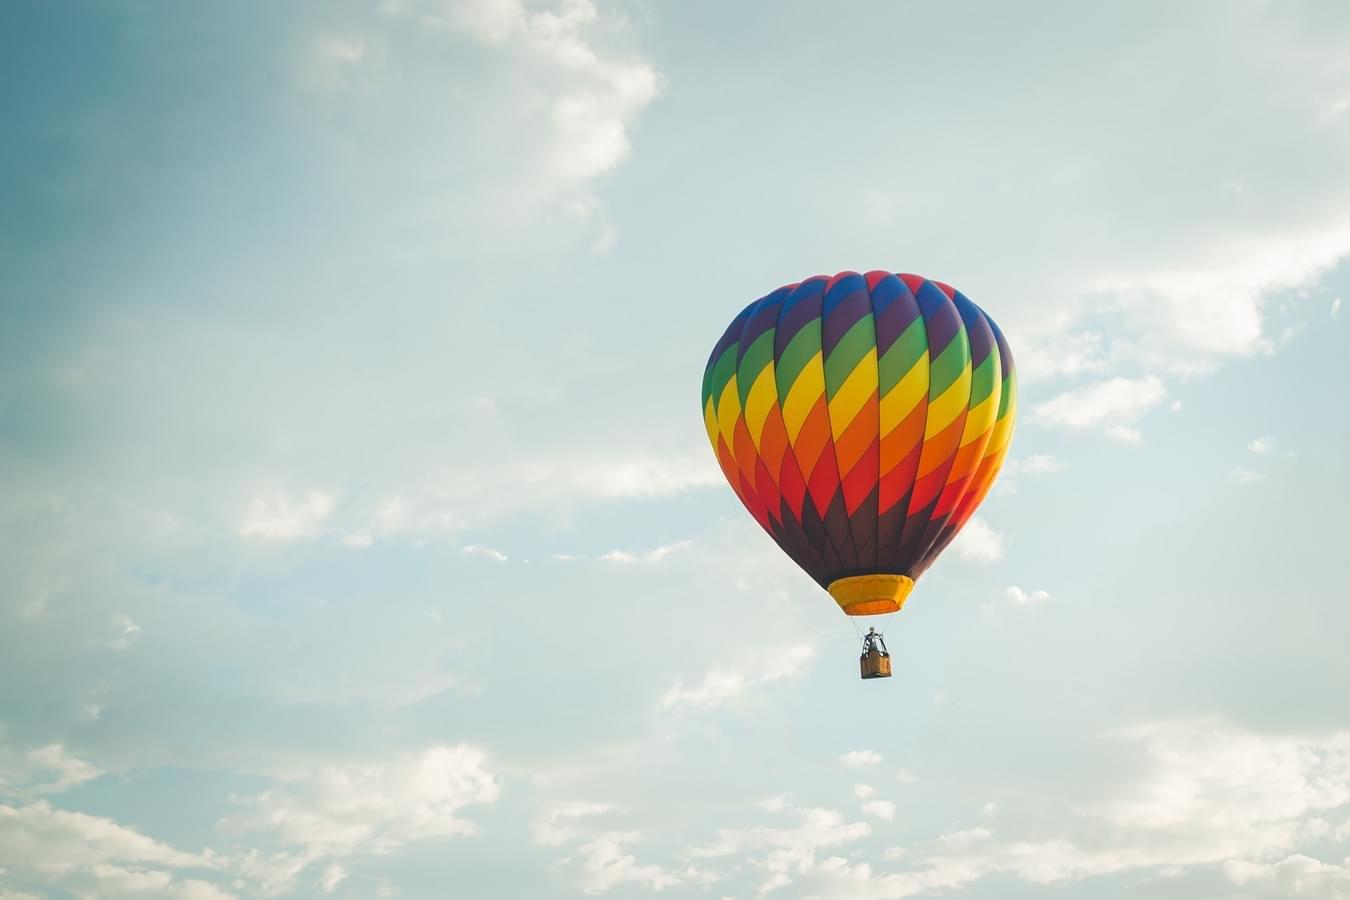 How to Prepare for Hot Air Balloon Ride in Dubai